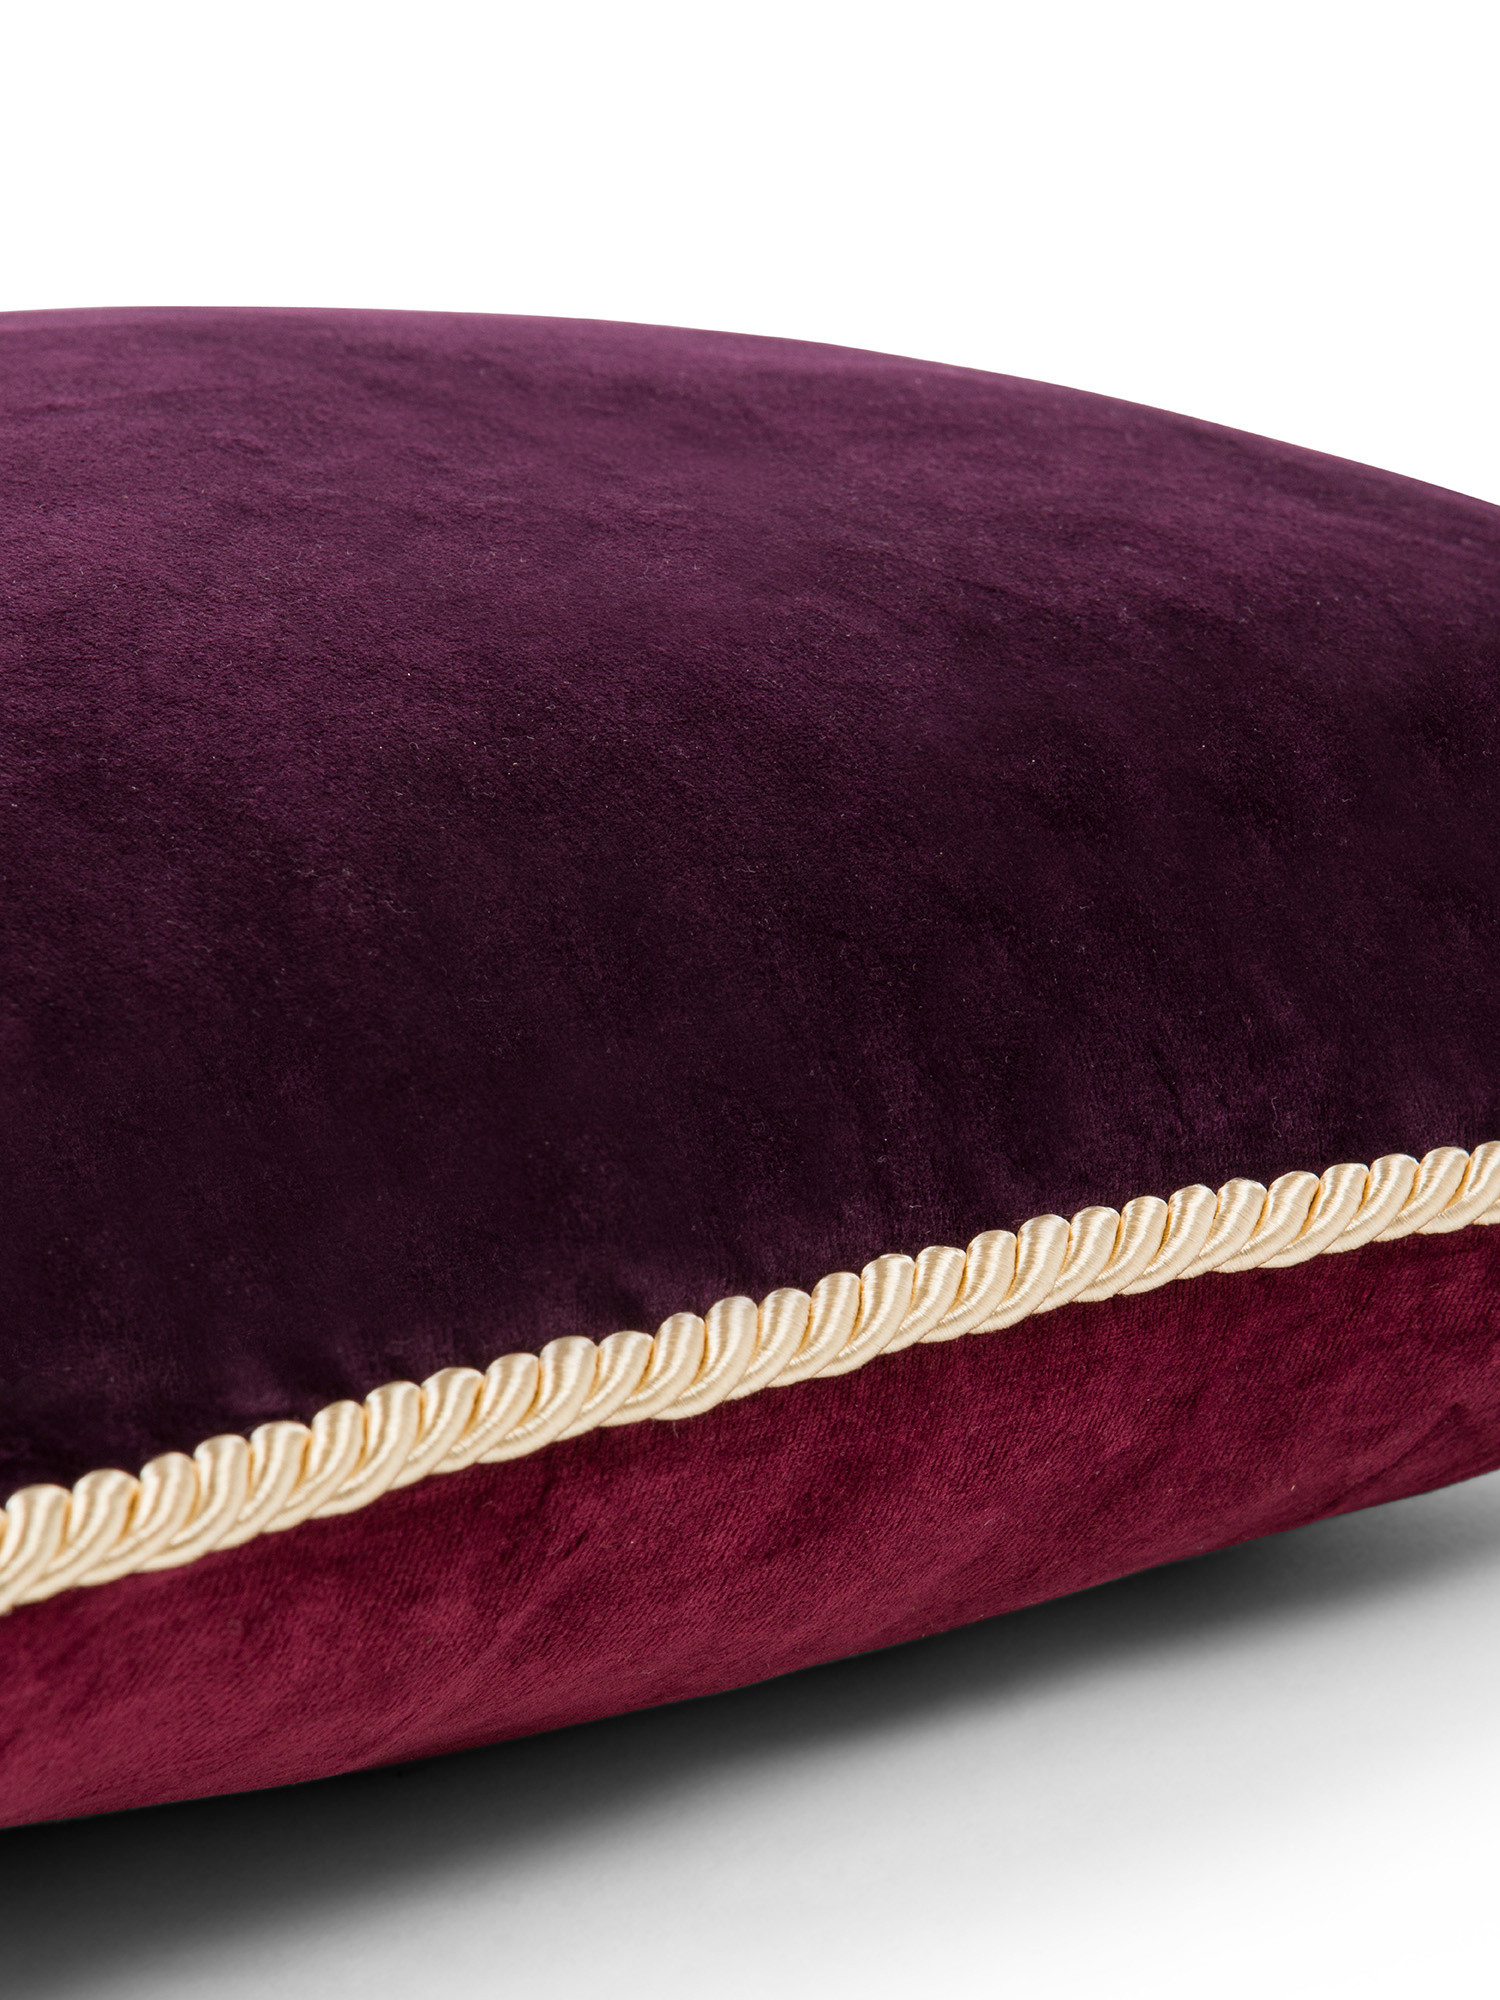 Two-tone velvet cushion 45X45cm, Red Bordeaux, large image number 2